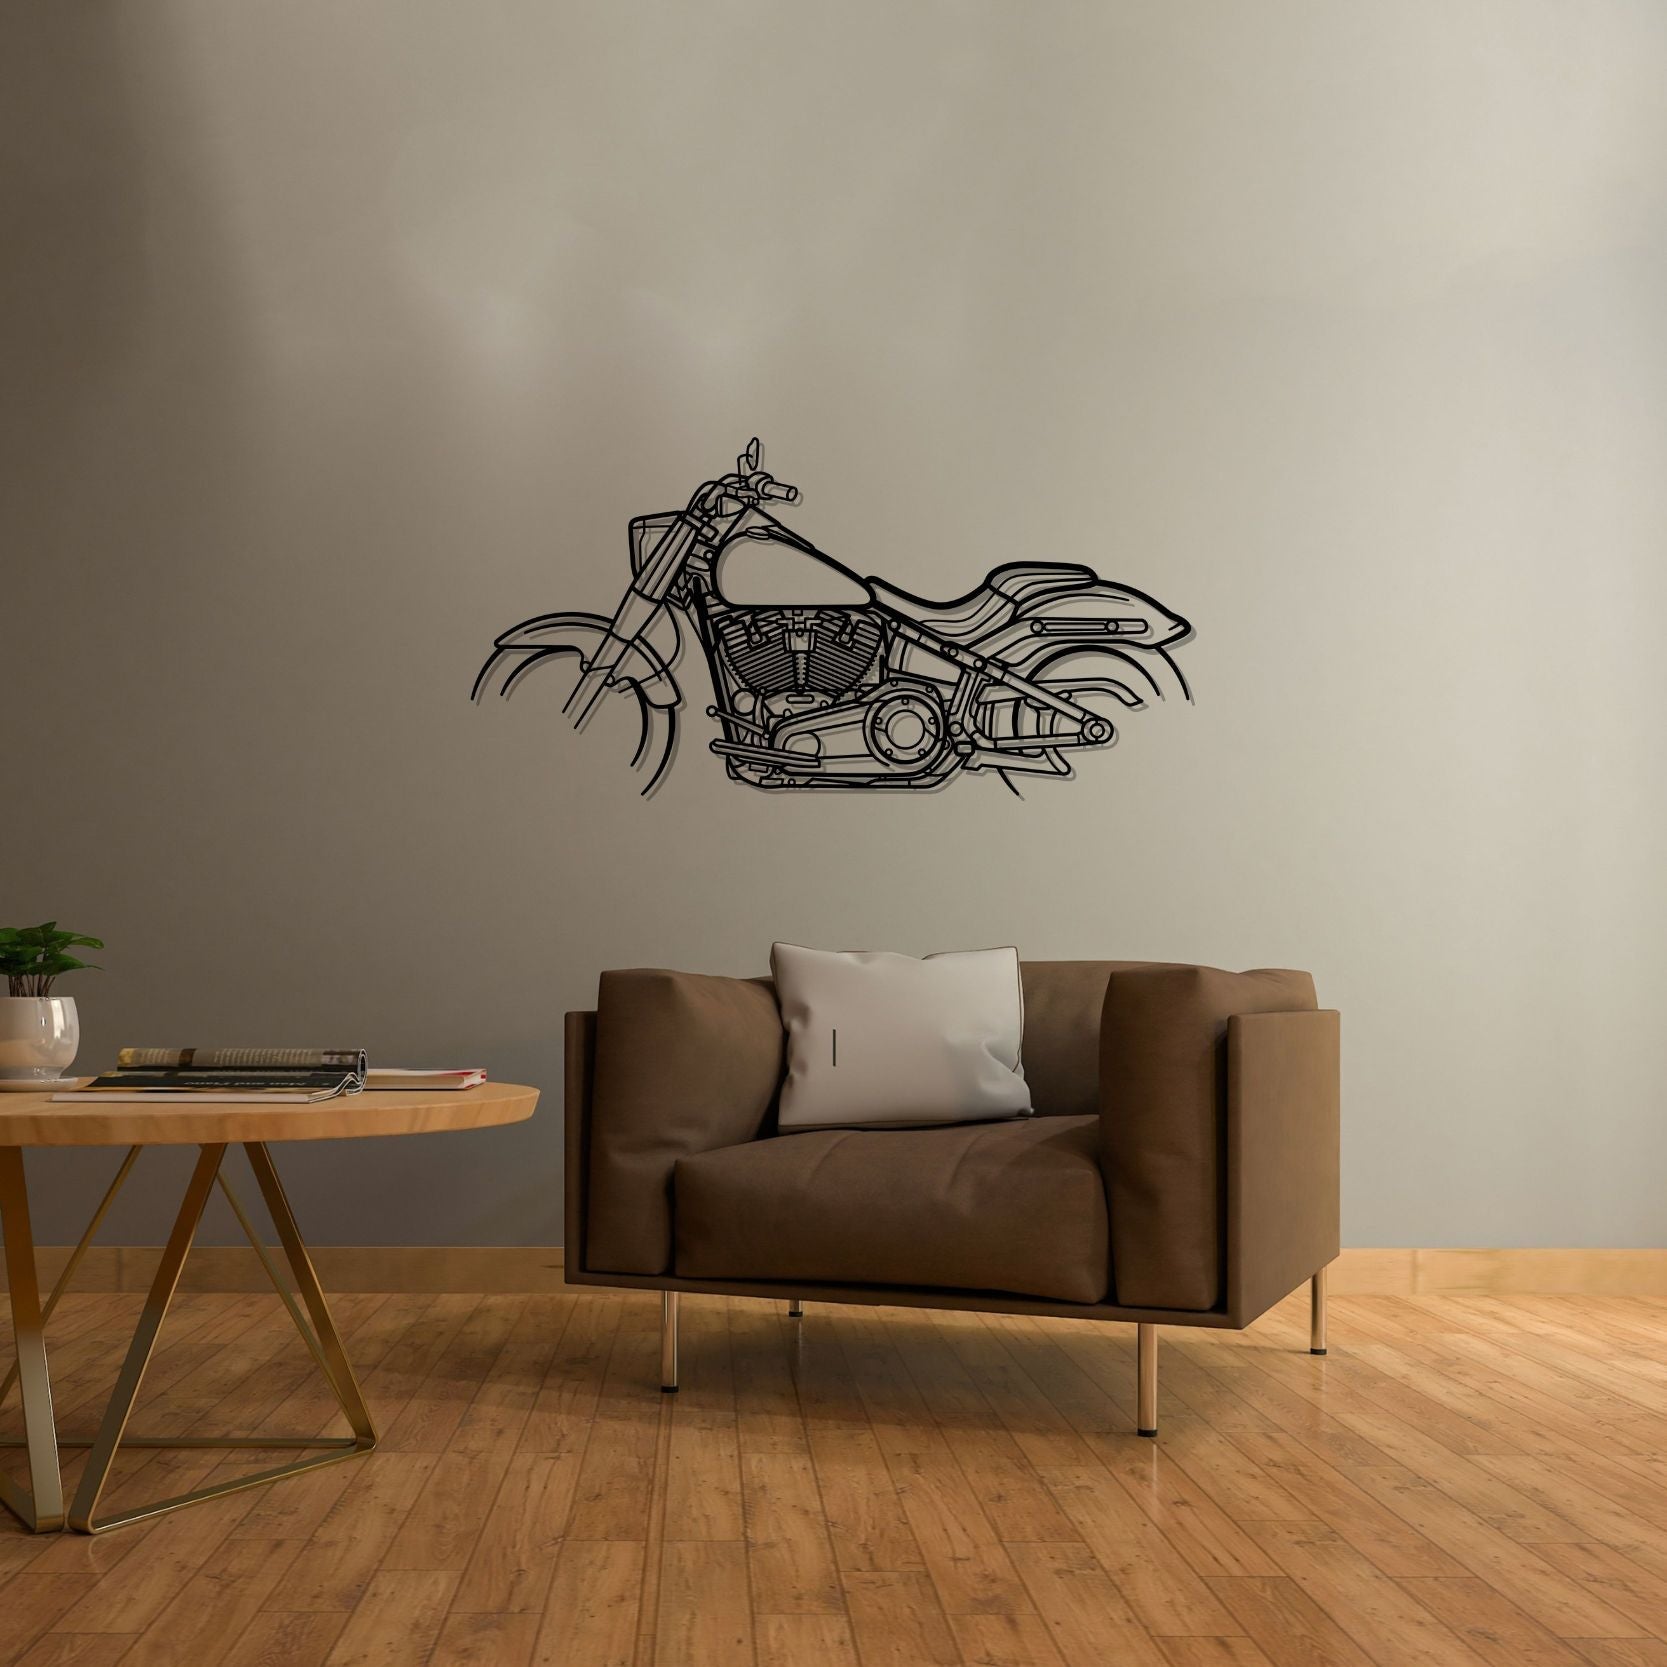 Motorcycle Wall Art Metal - Motorcycle Metal Signs - Metal Signs For Garage - Garage Decorations